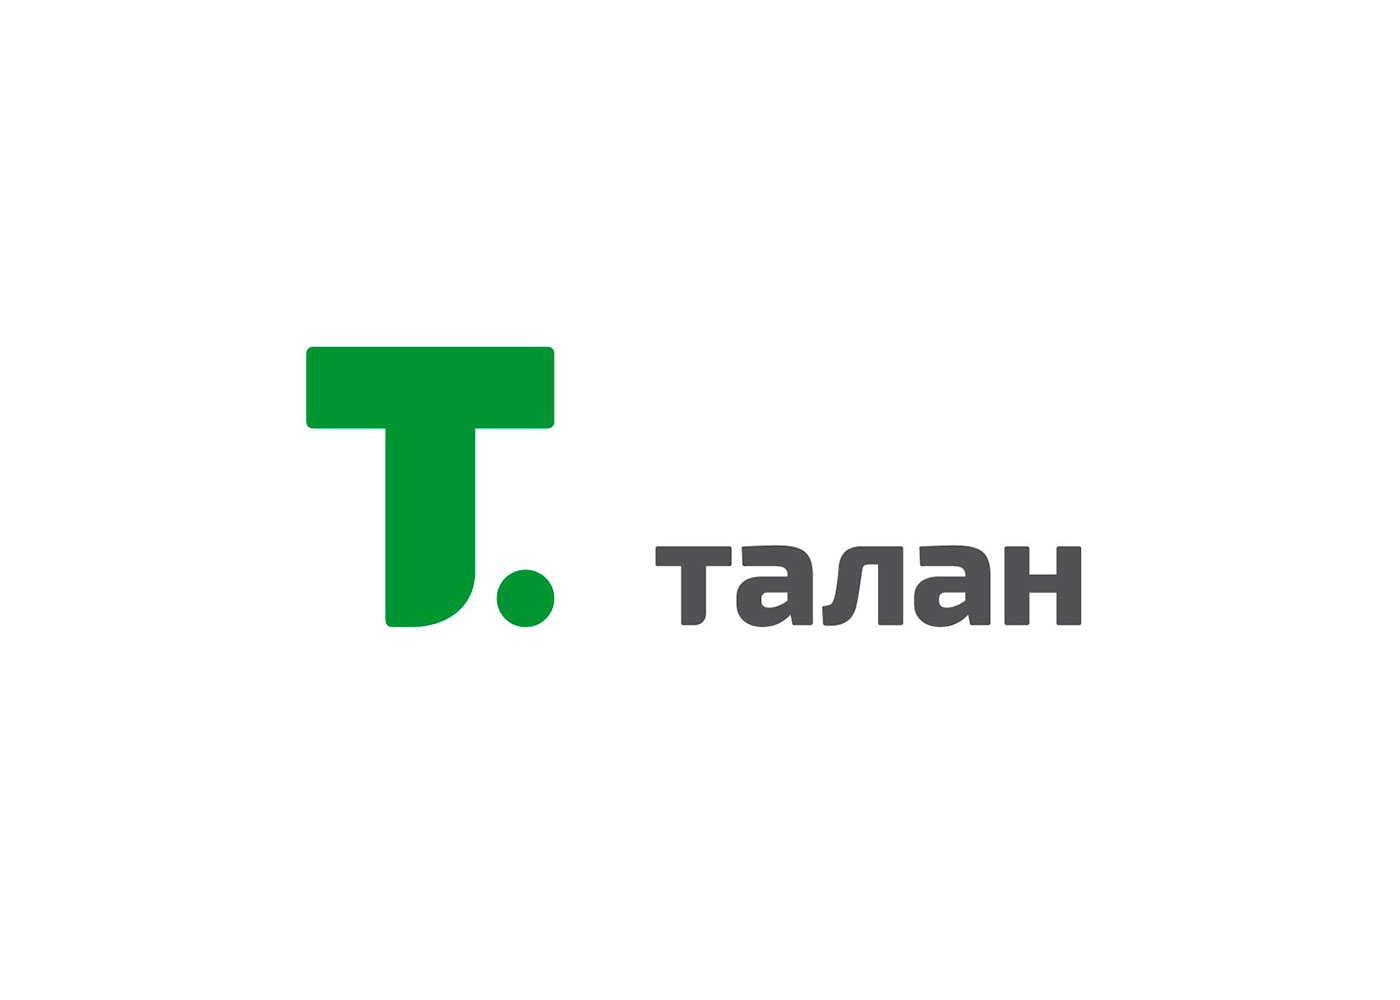 talan_logo.jpg